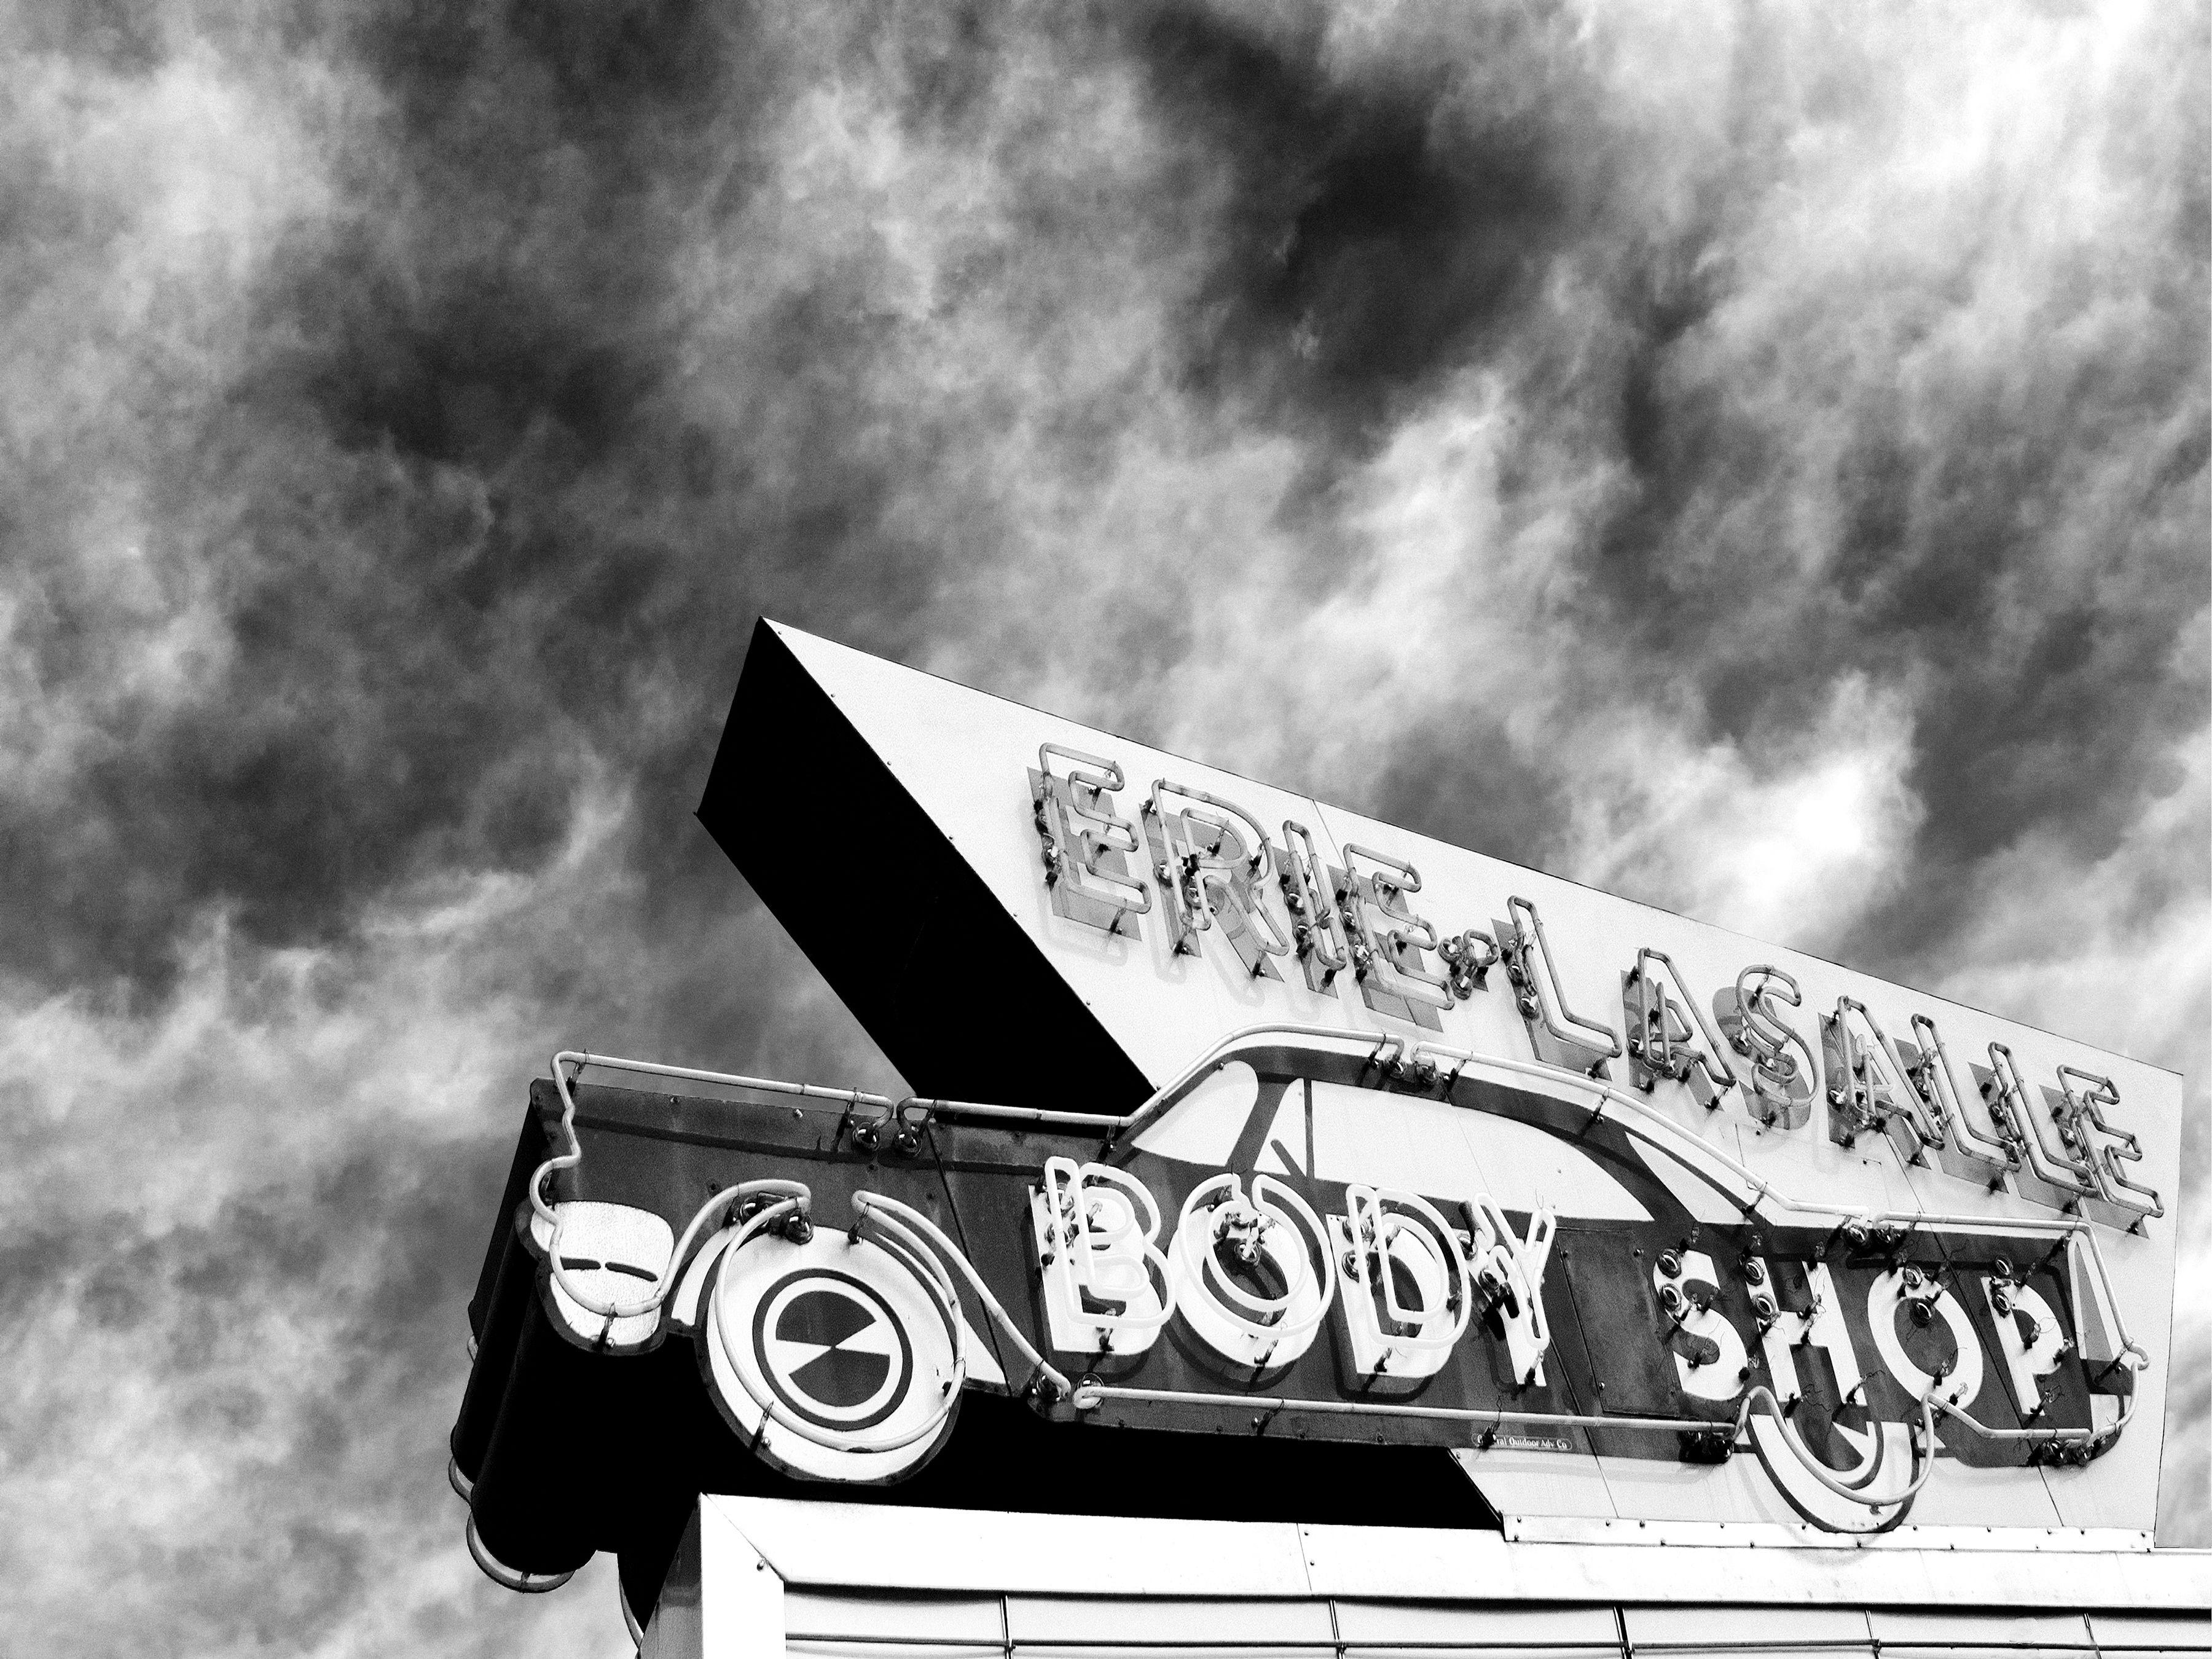 William Dey Black and White Photograph - AUTO FOCUS Auto Body Shop, Photograph, C-Type